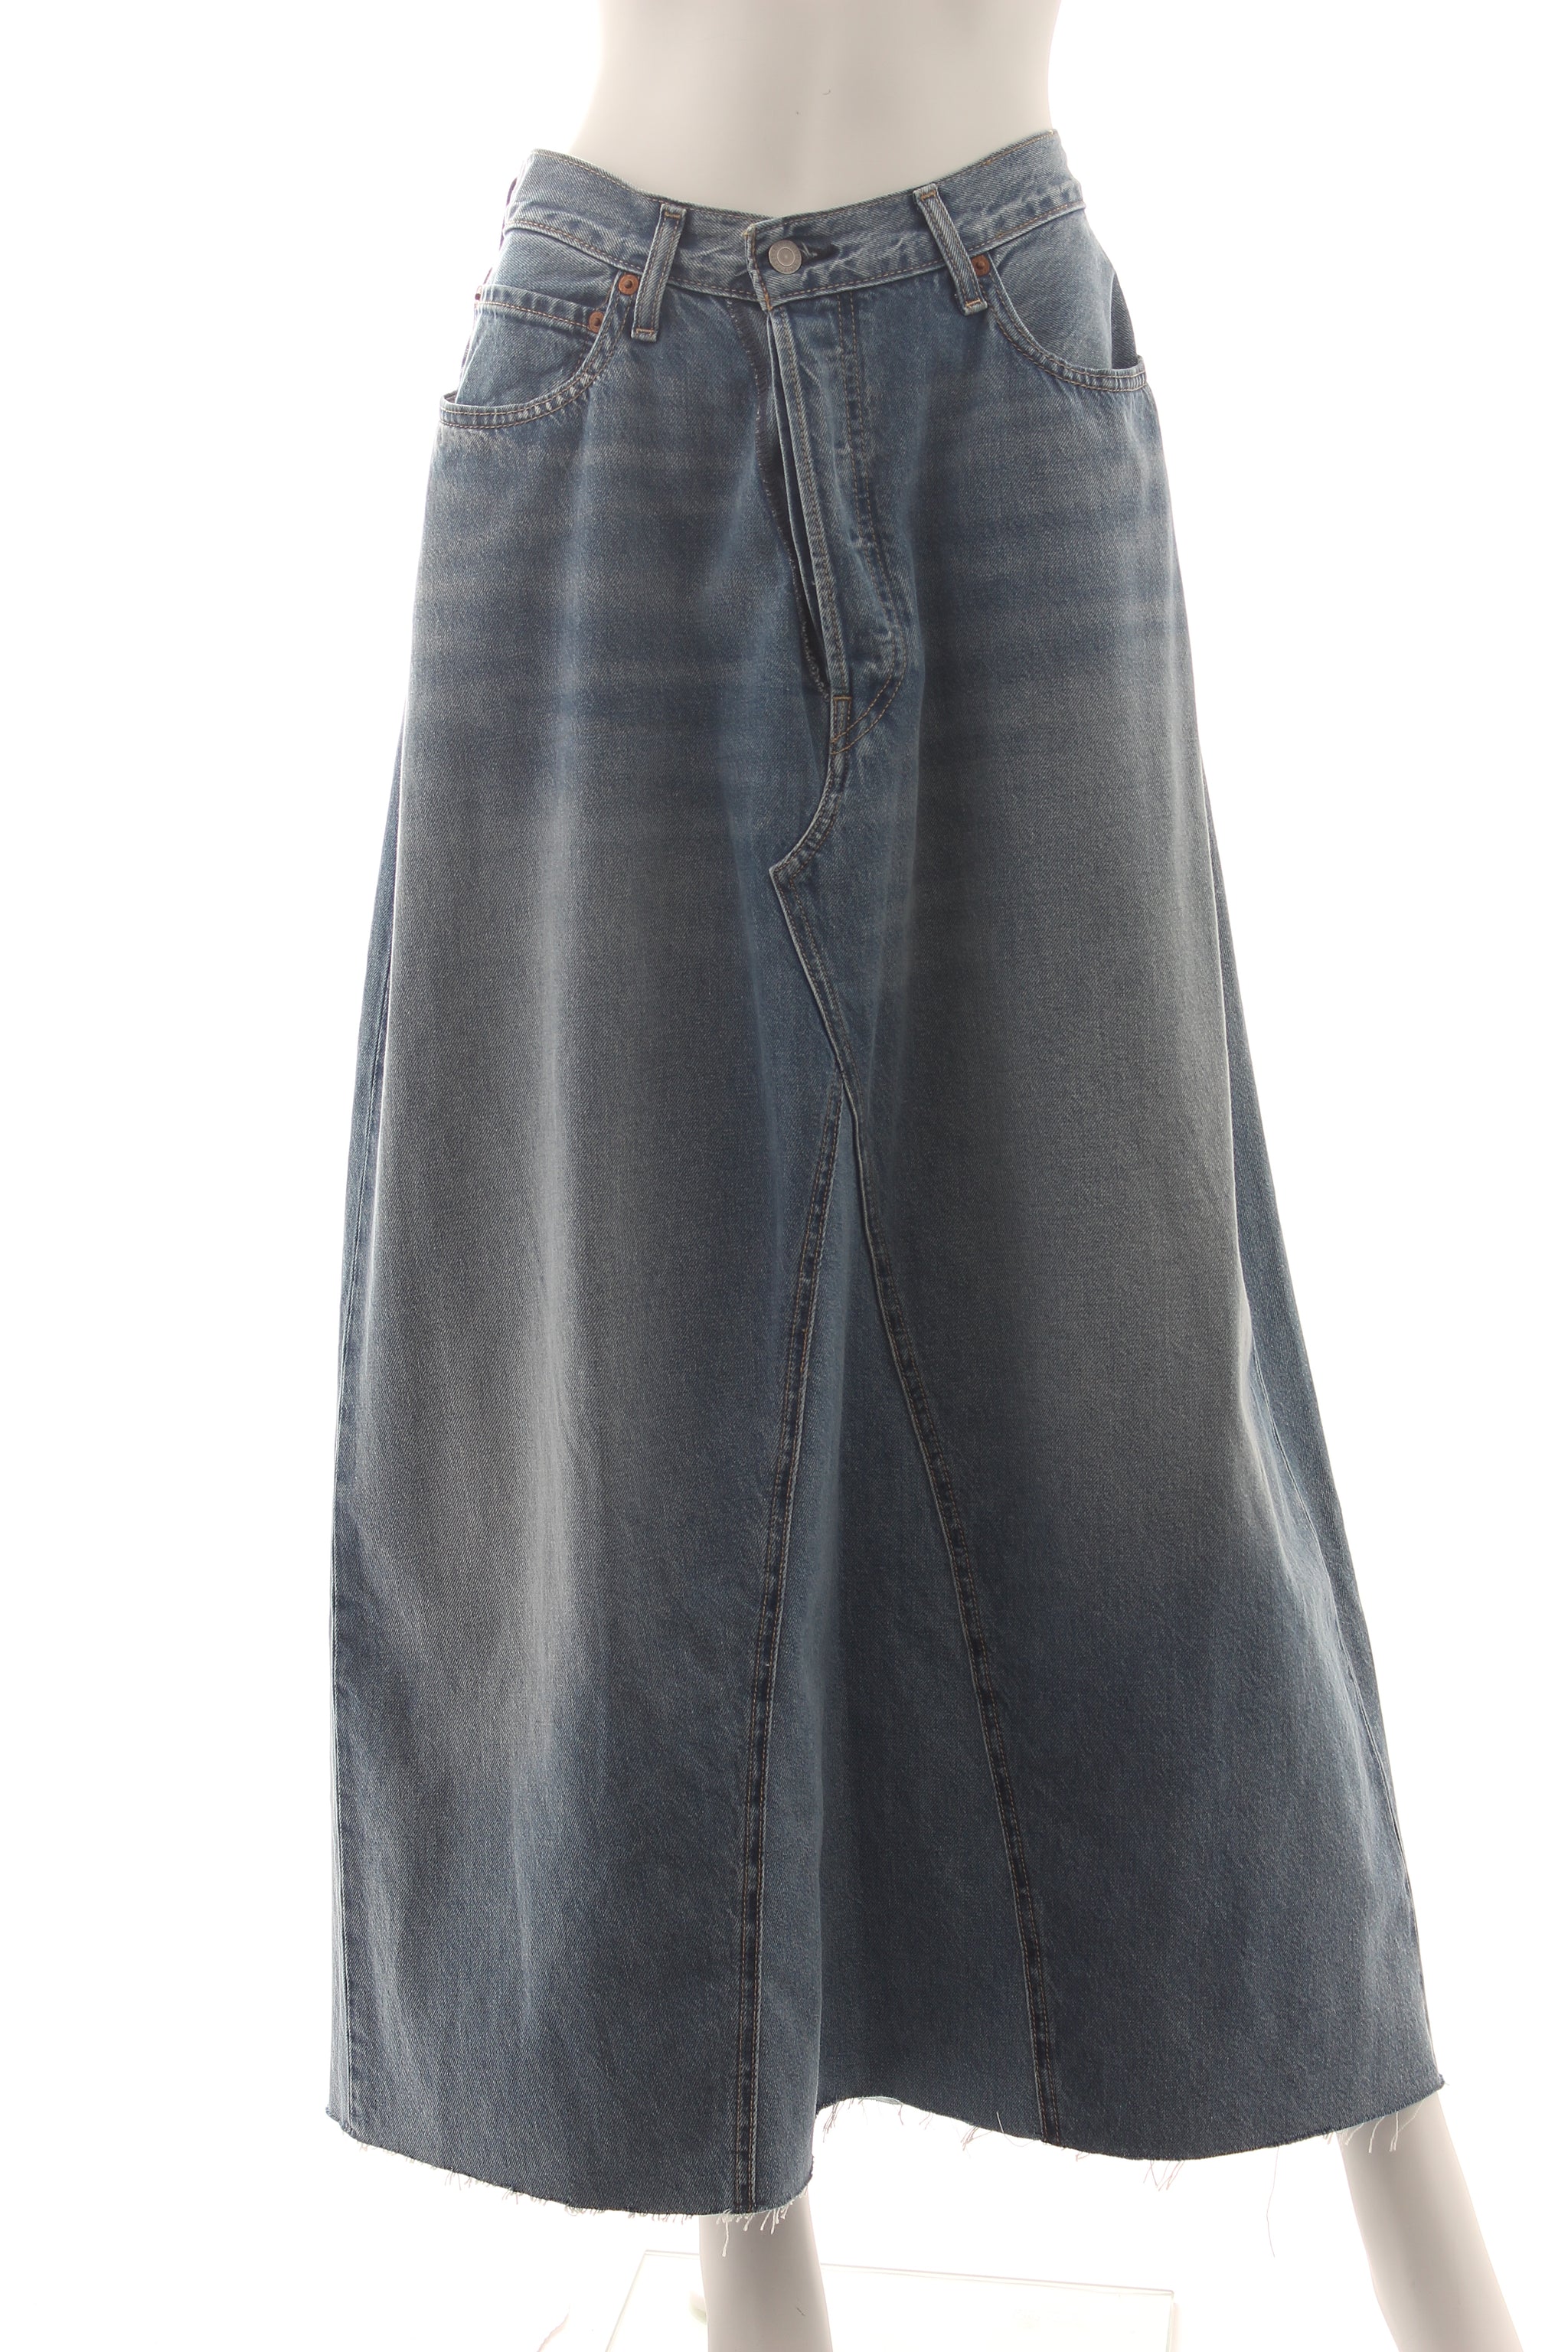 Ganni x Levi's Deconstructed Denim Skirt - Closet Upgrade